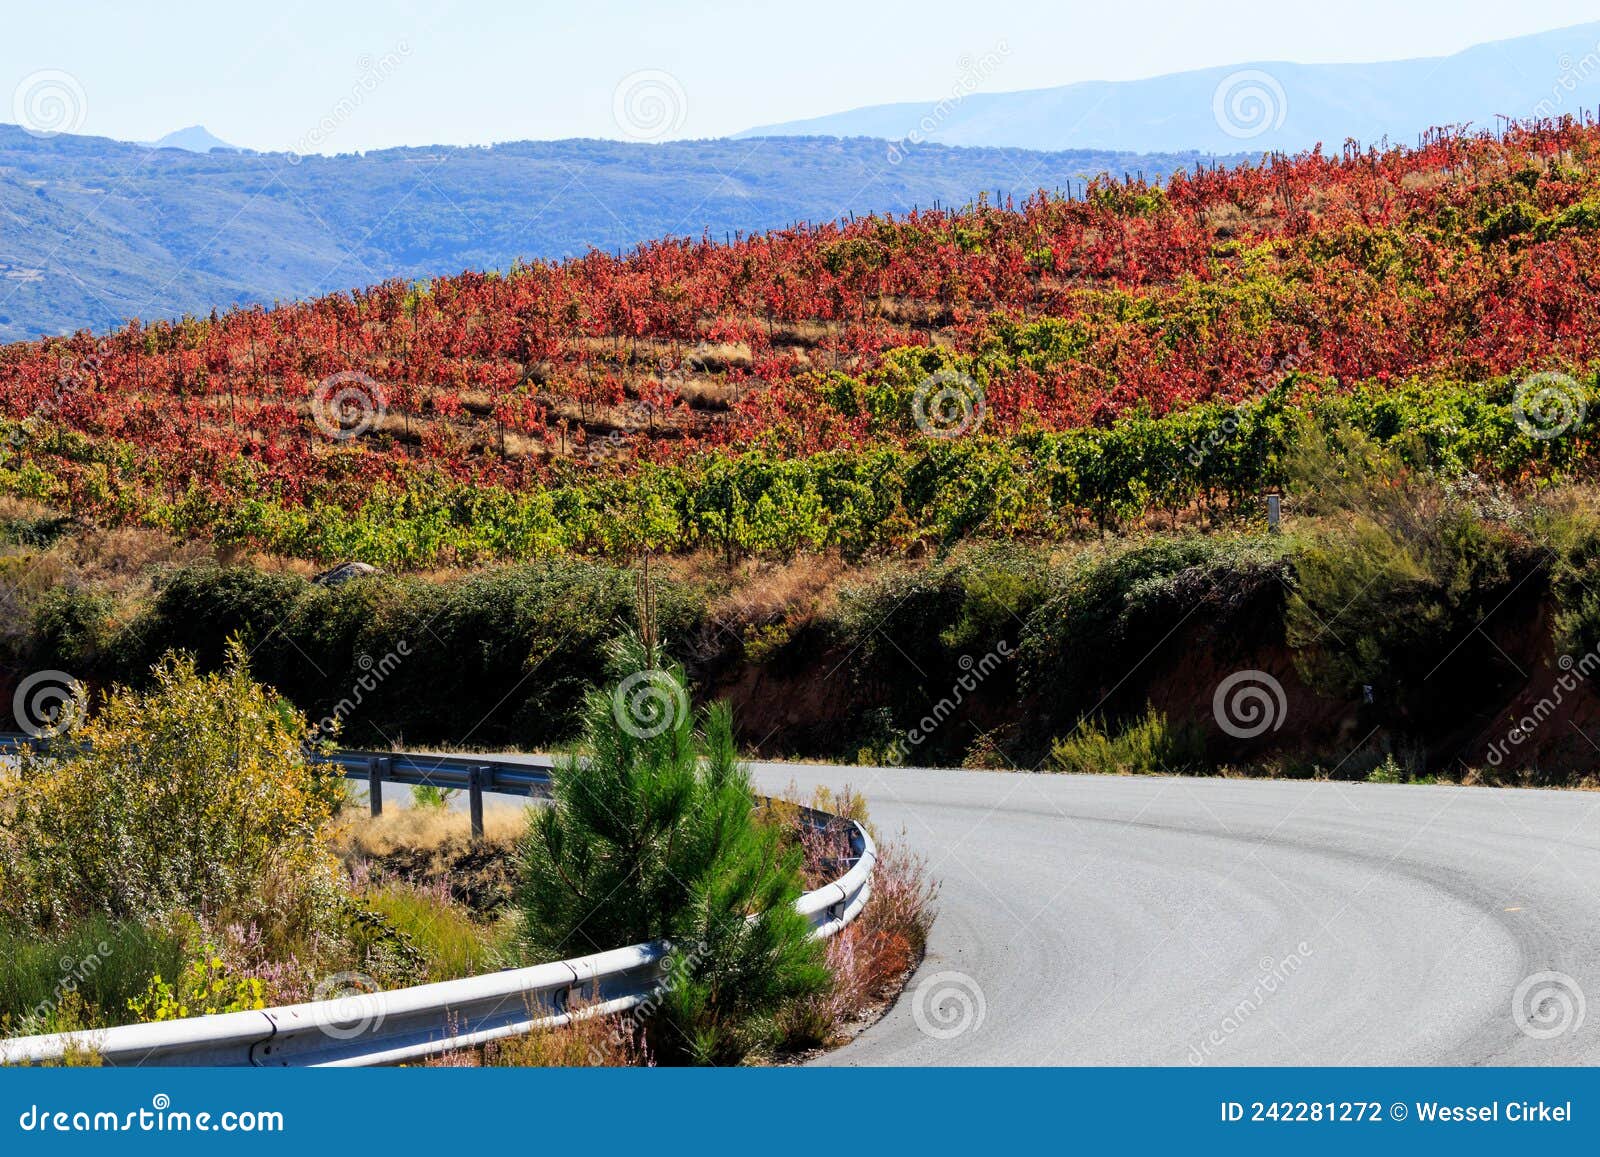 spanish vineyard route in autumn, sierra de francia, spain